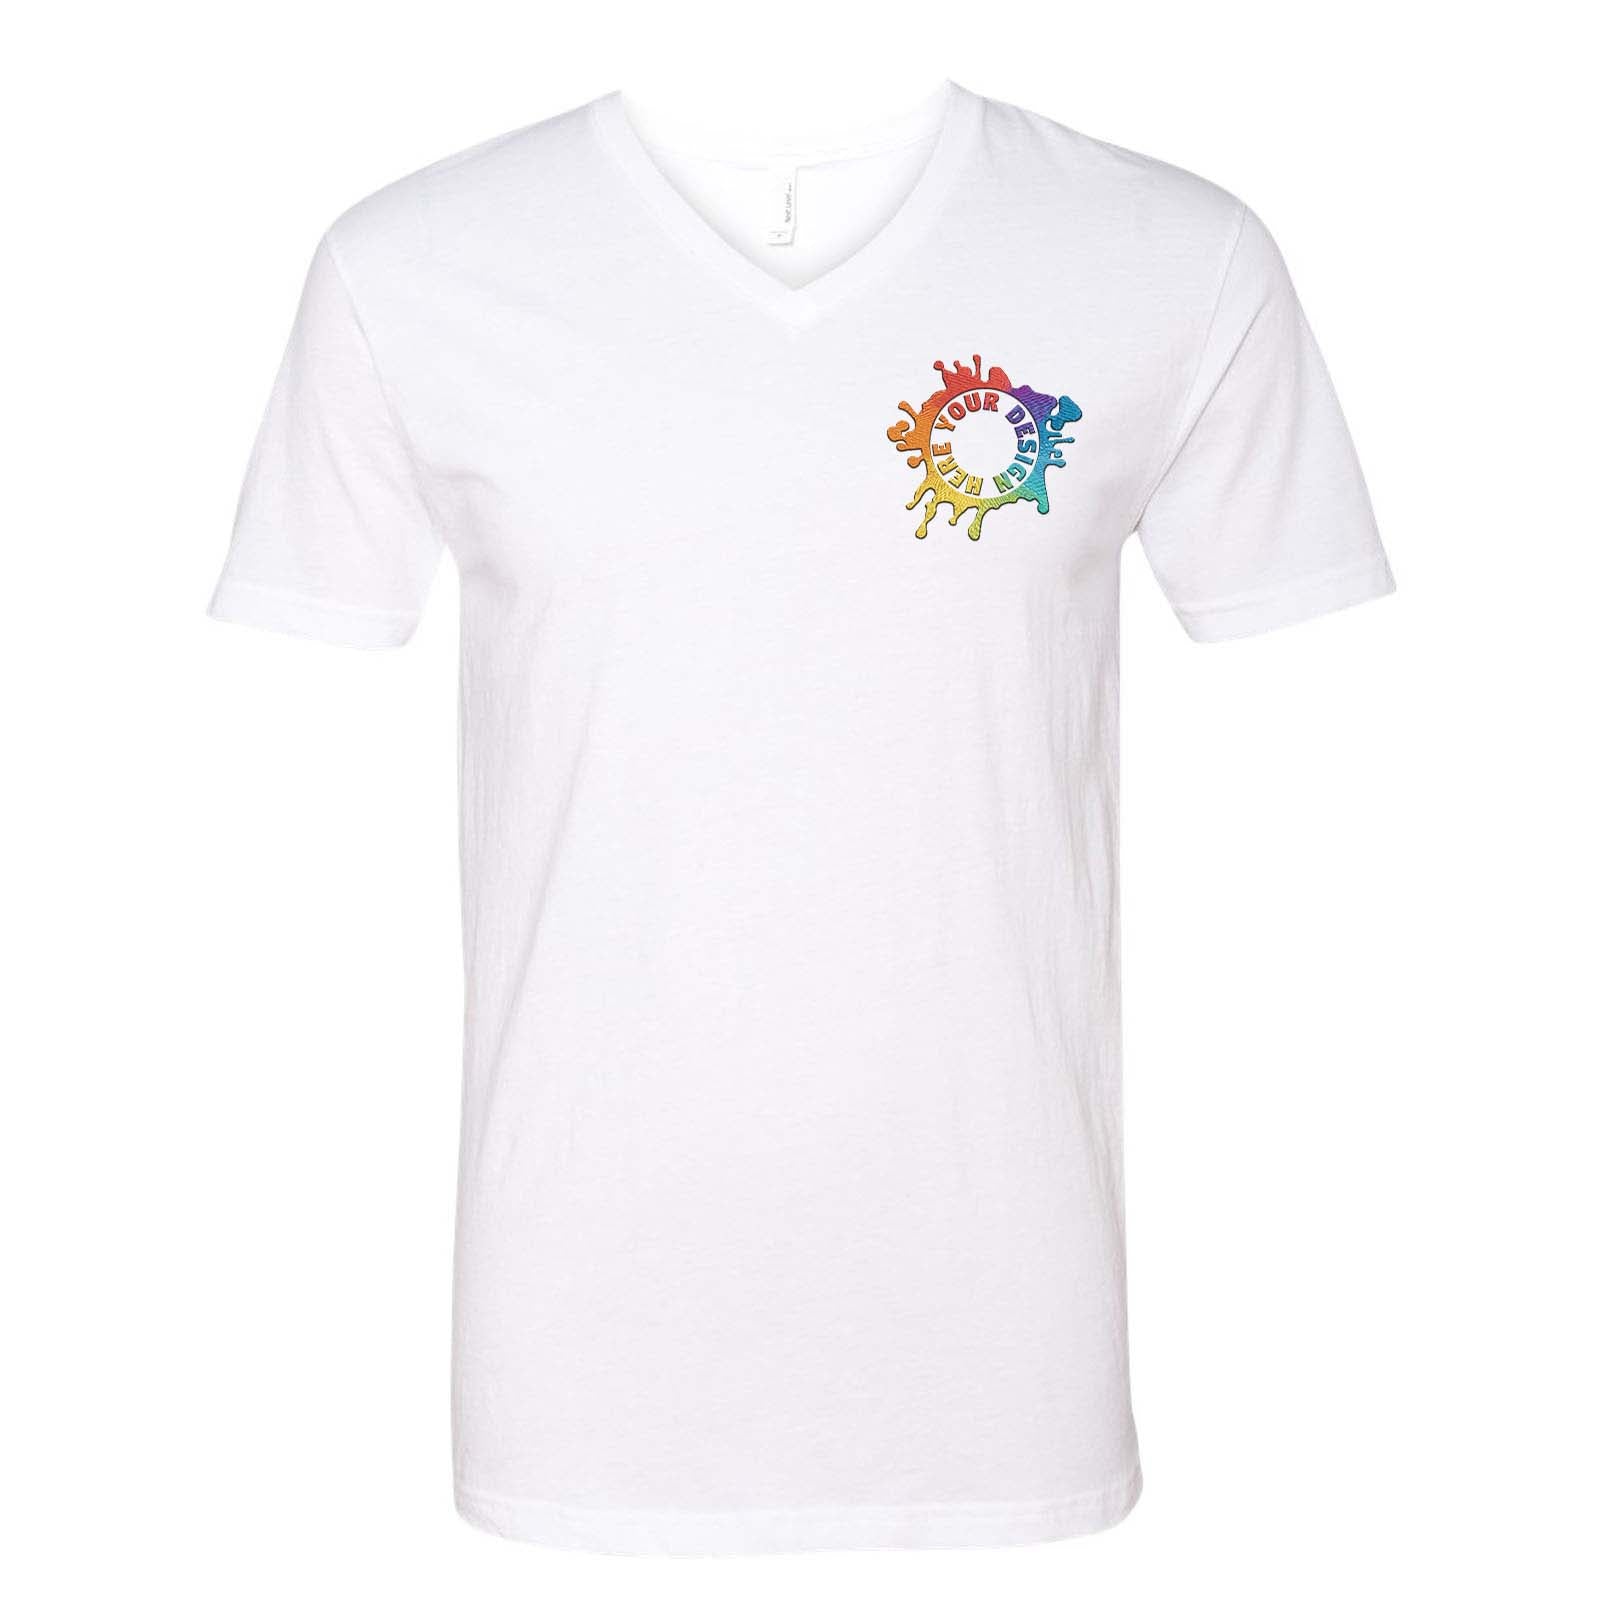 Next Level Men's Cotton/Polyester V-Neck T-Shirt Embroidery - Mato & Hash